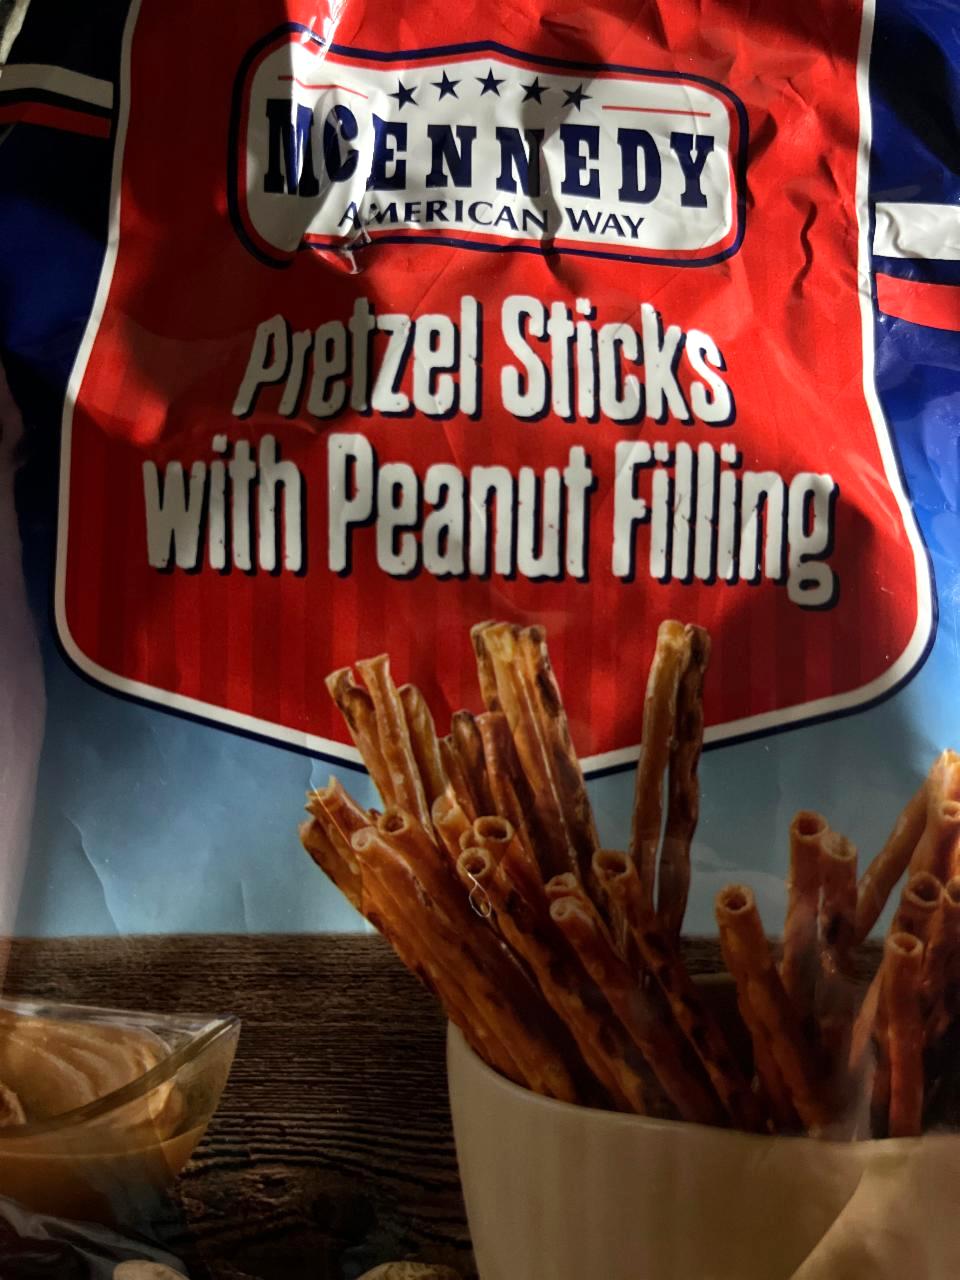 Képek - Pretzel sticks with peanut filling Mcennedy American way